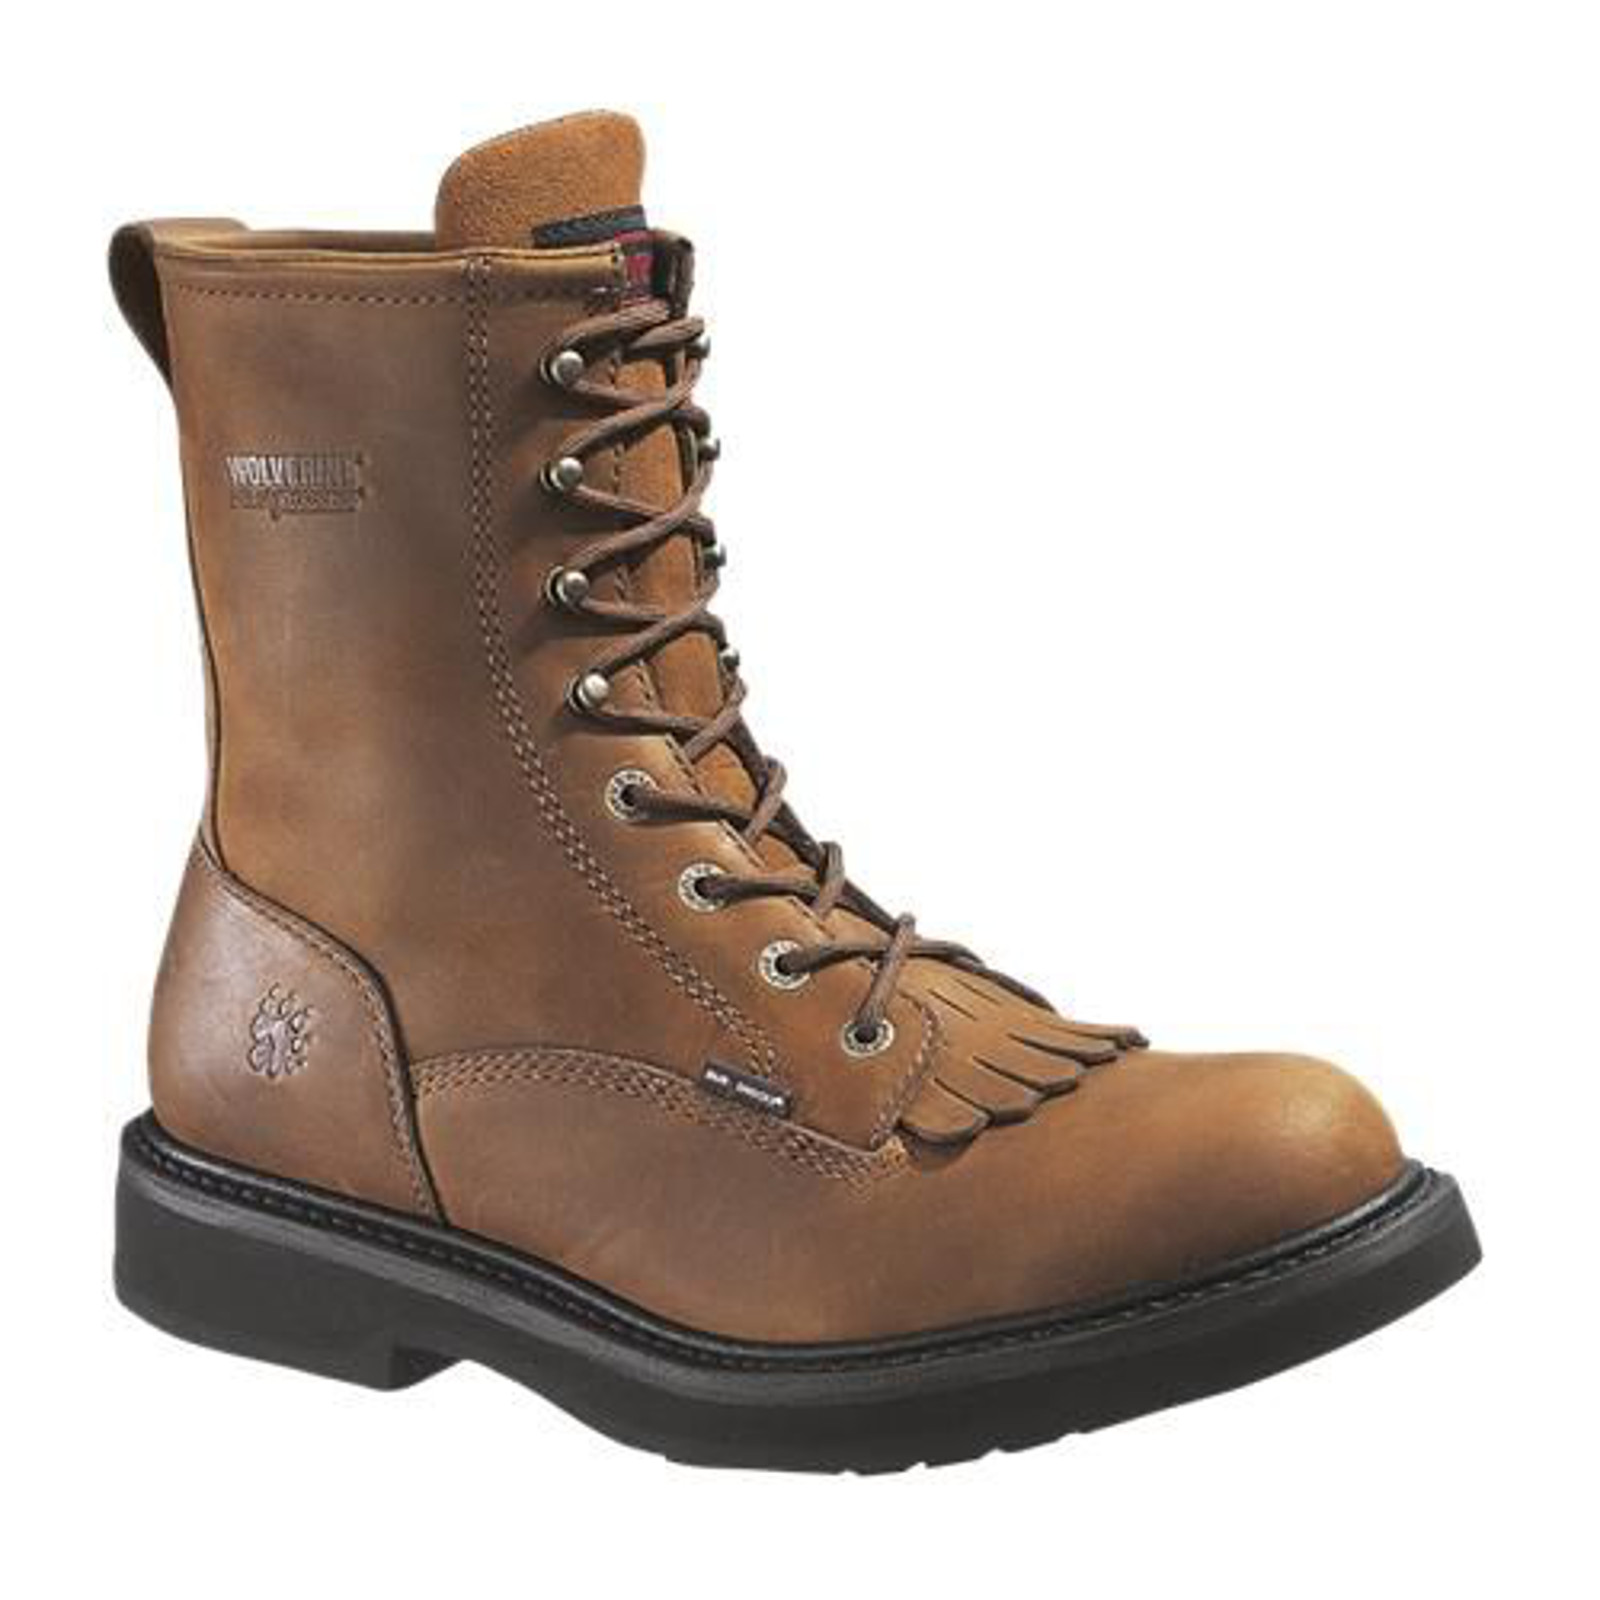 UPC 098776023194 product image for Men's Ingham Kiltie DuraShocks Brown Leather Steel-Toe Work Boots | upcitemdb.com